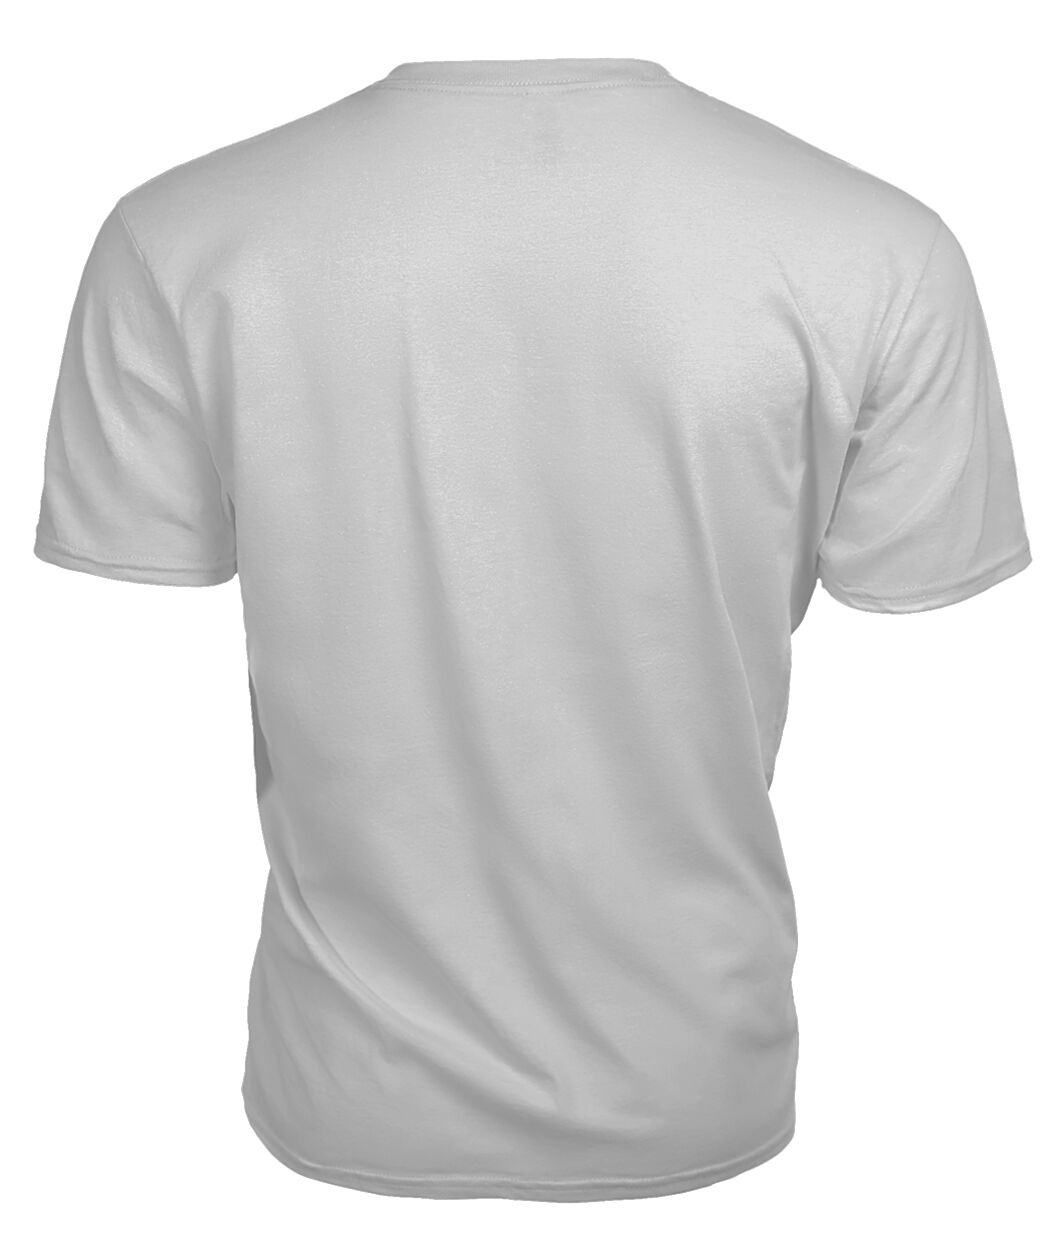 Maxtone Family Tartan - 2D T-shirt